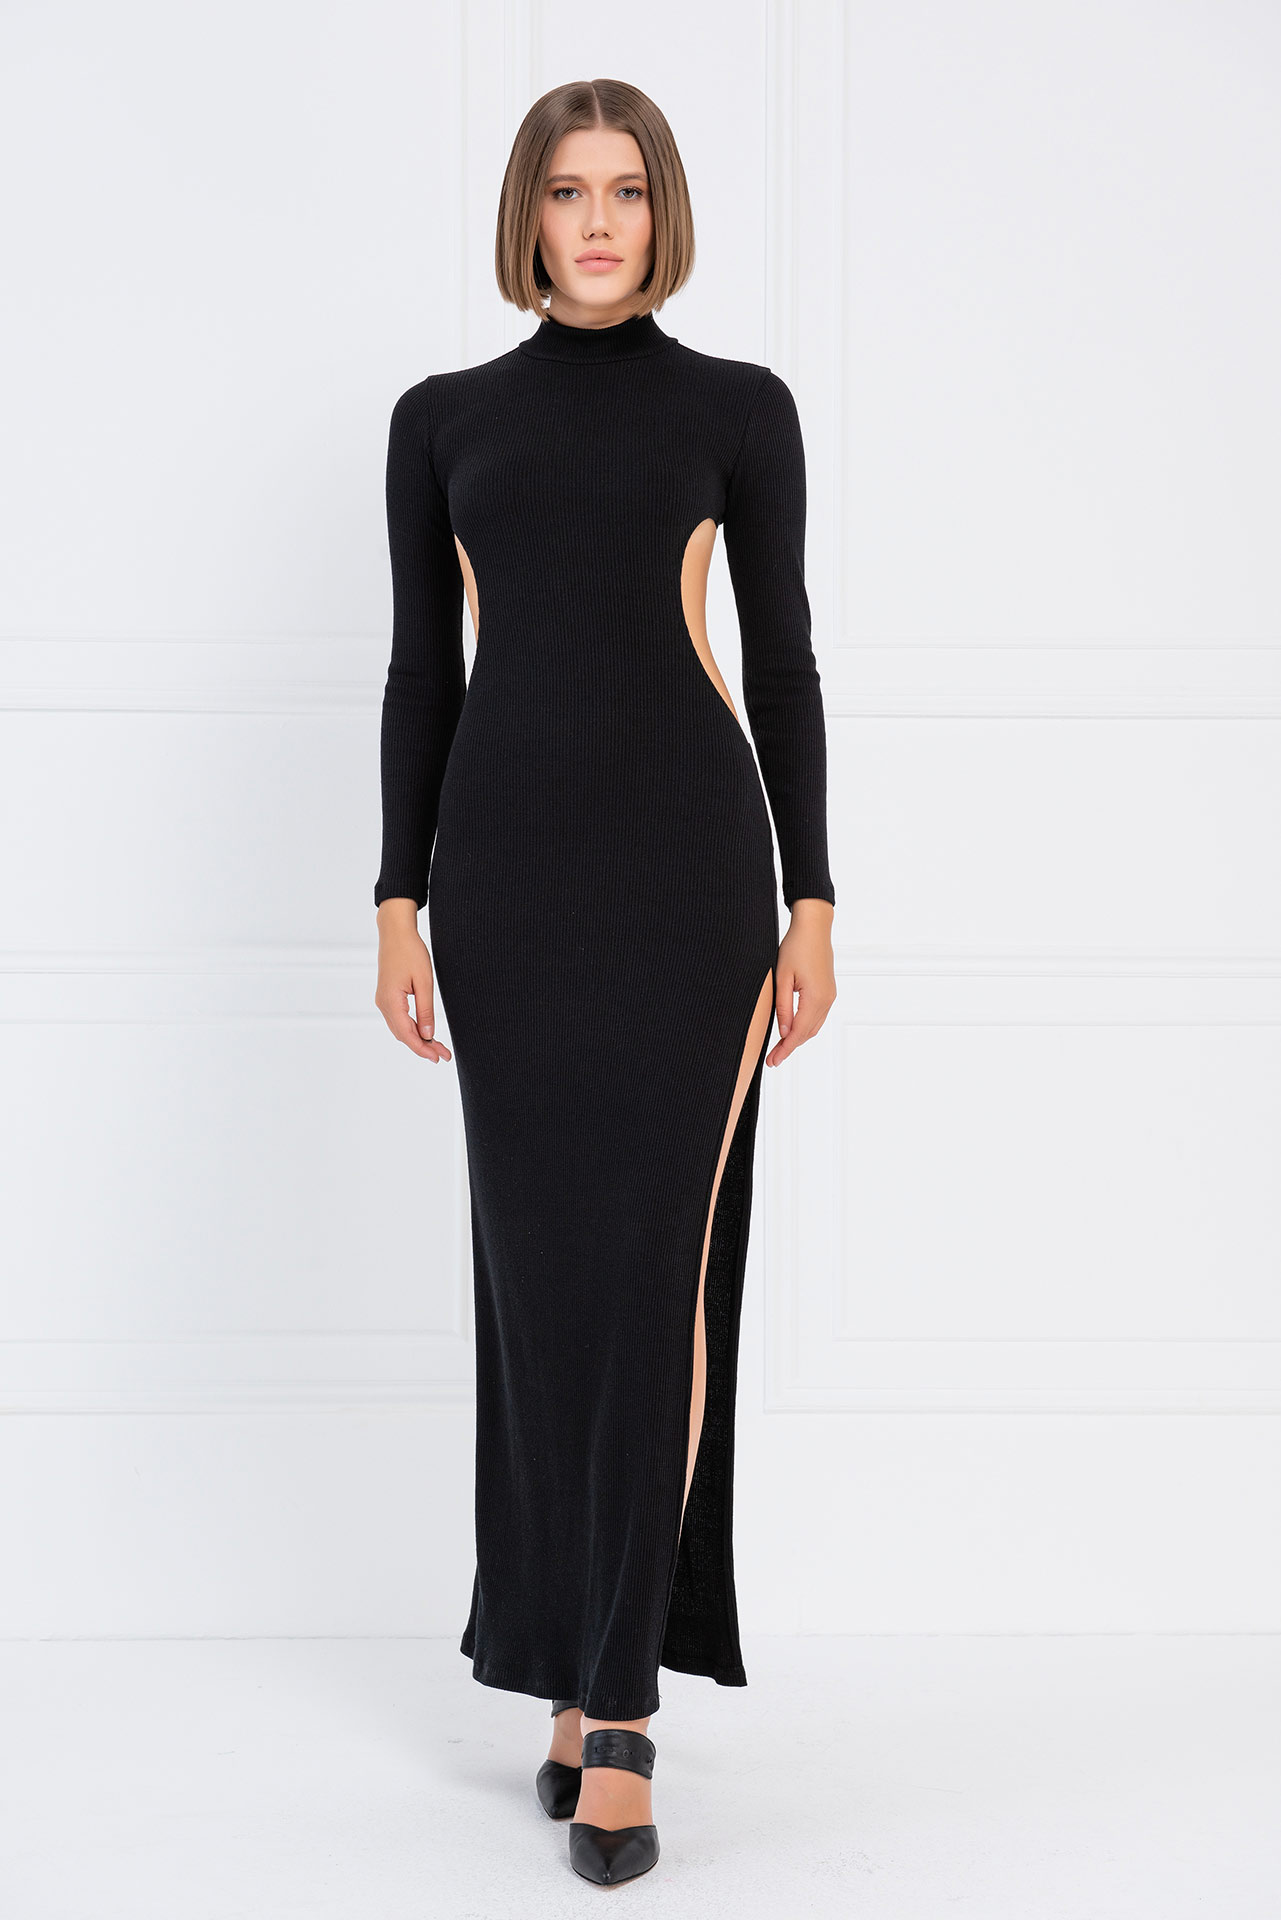 Wholesale Black Backless Split-Leg Maxi Dress